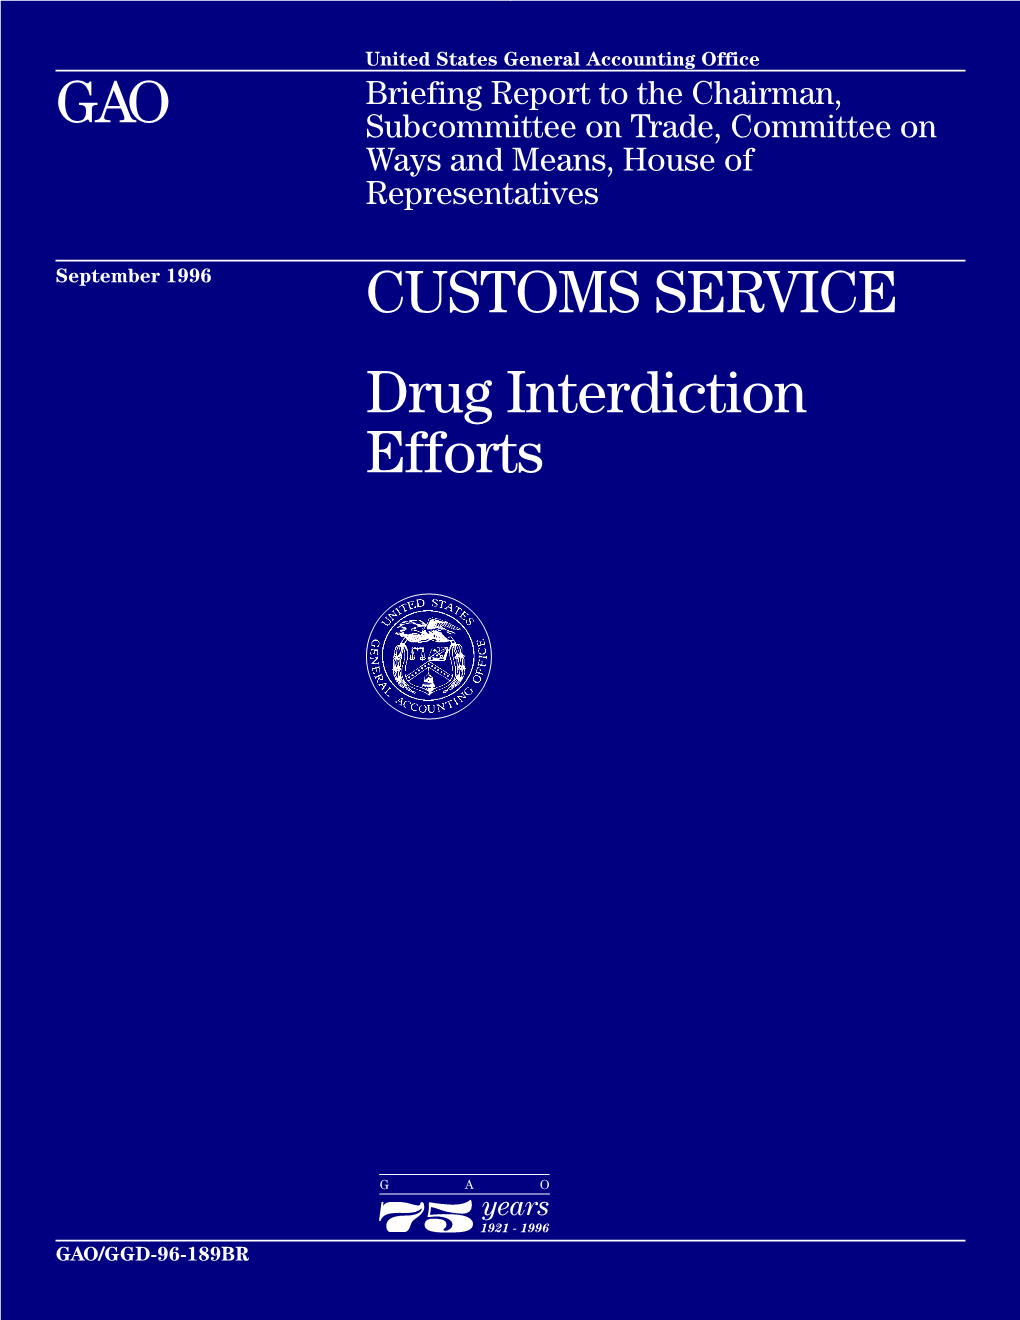 GGD-96-189BR Customs Service: Drug Interdiction Efforts